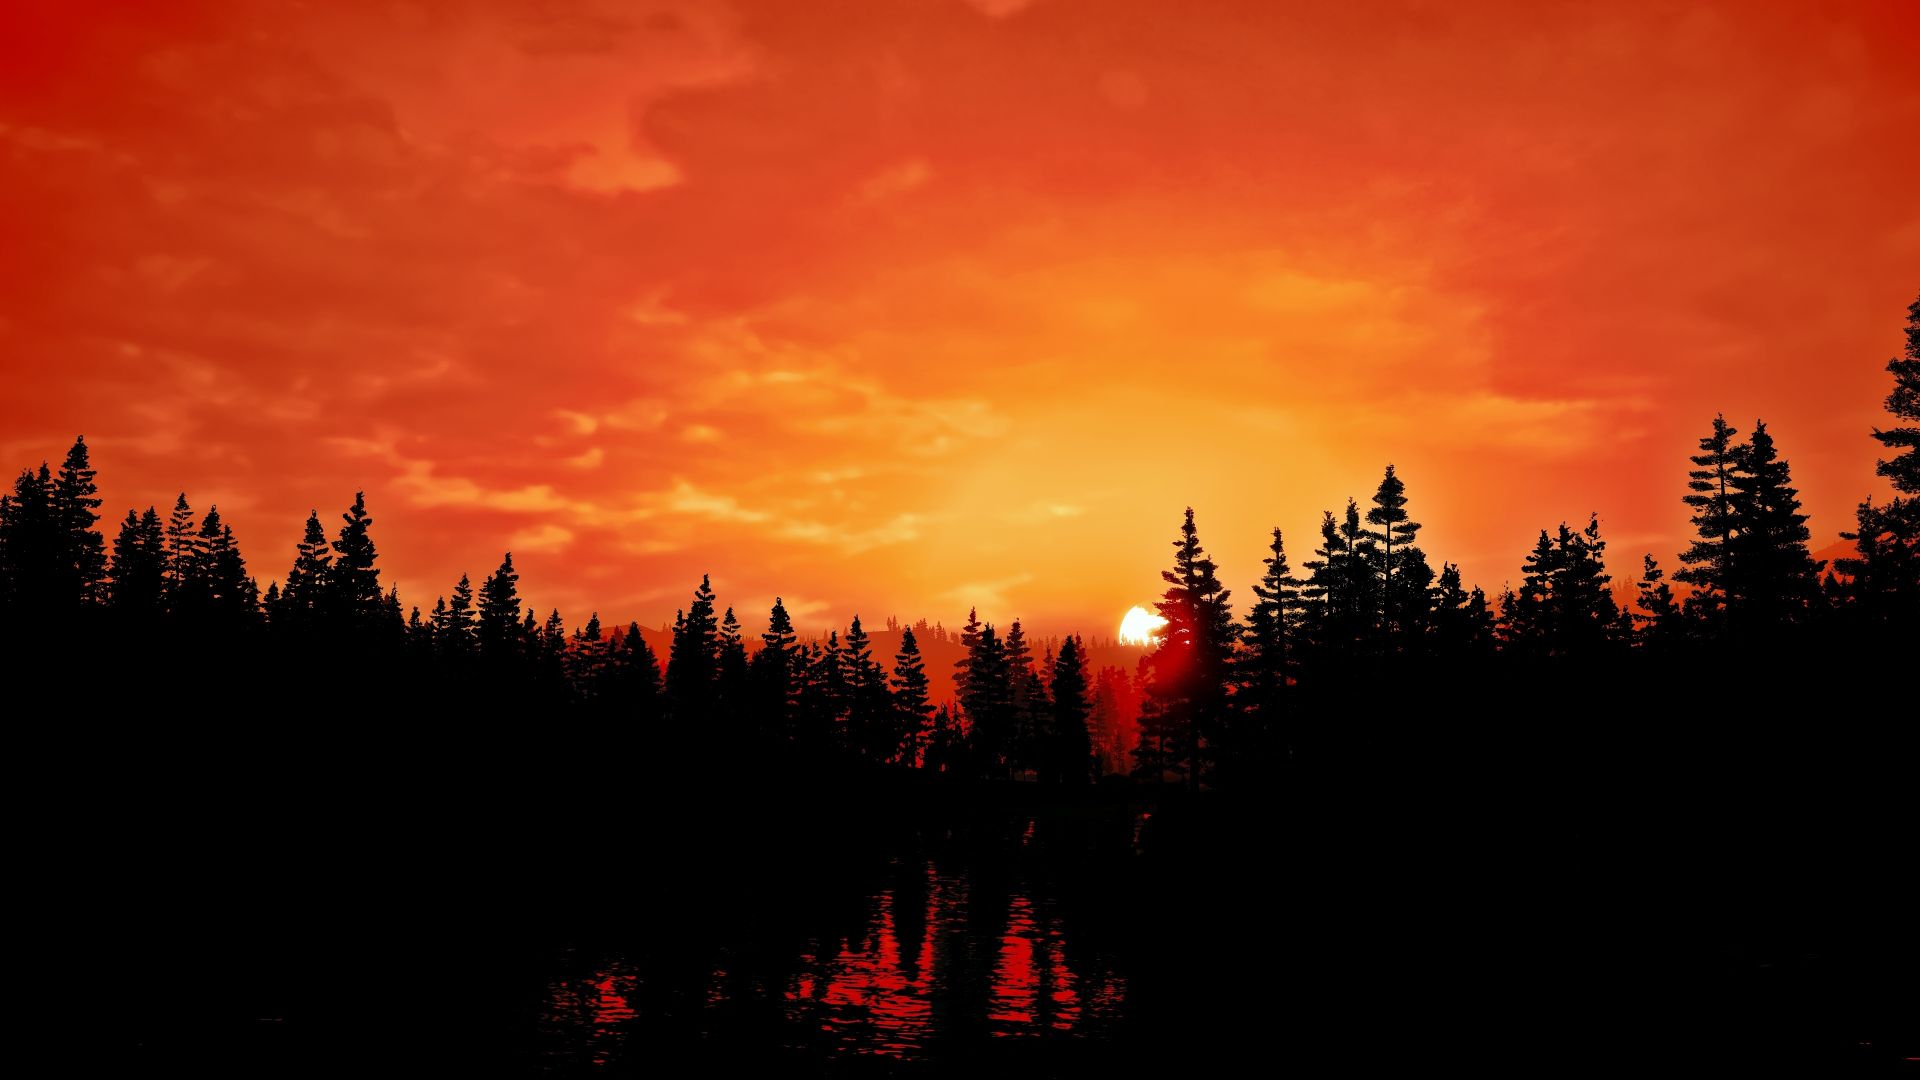 Wallpaper Far Cry 5, sunset, orange sky, silhouette